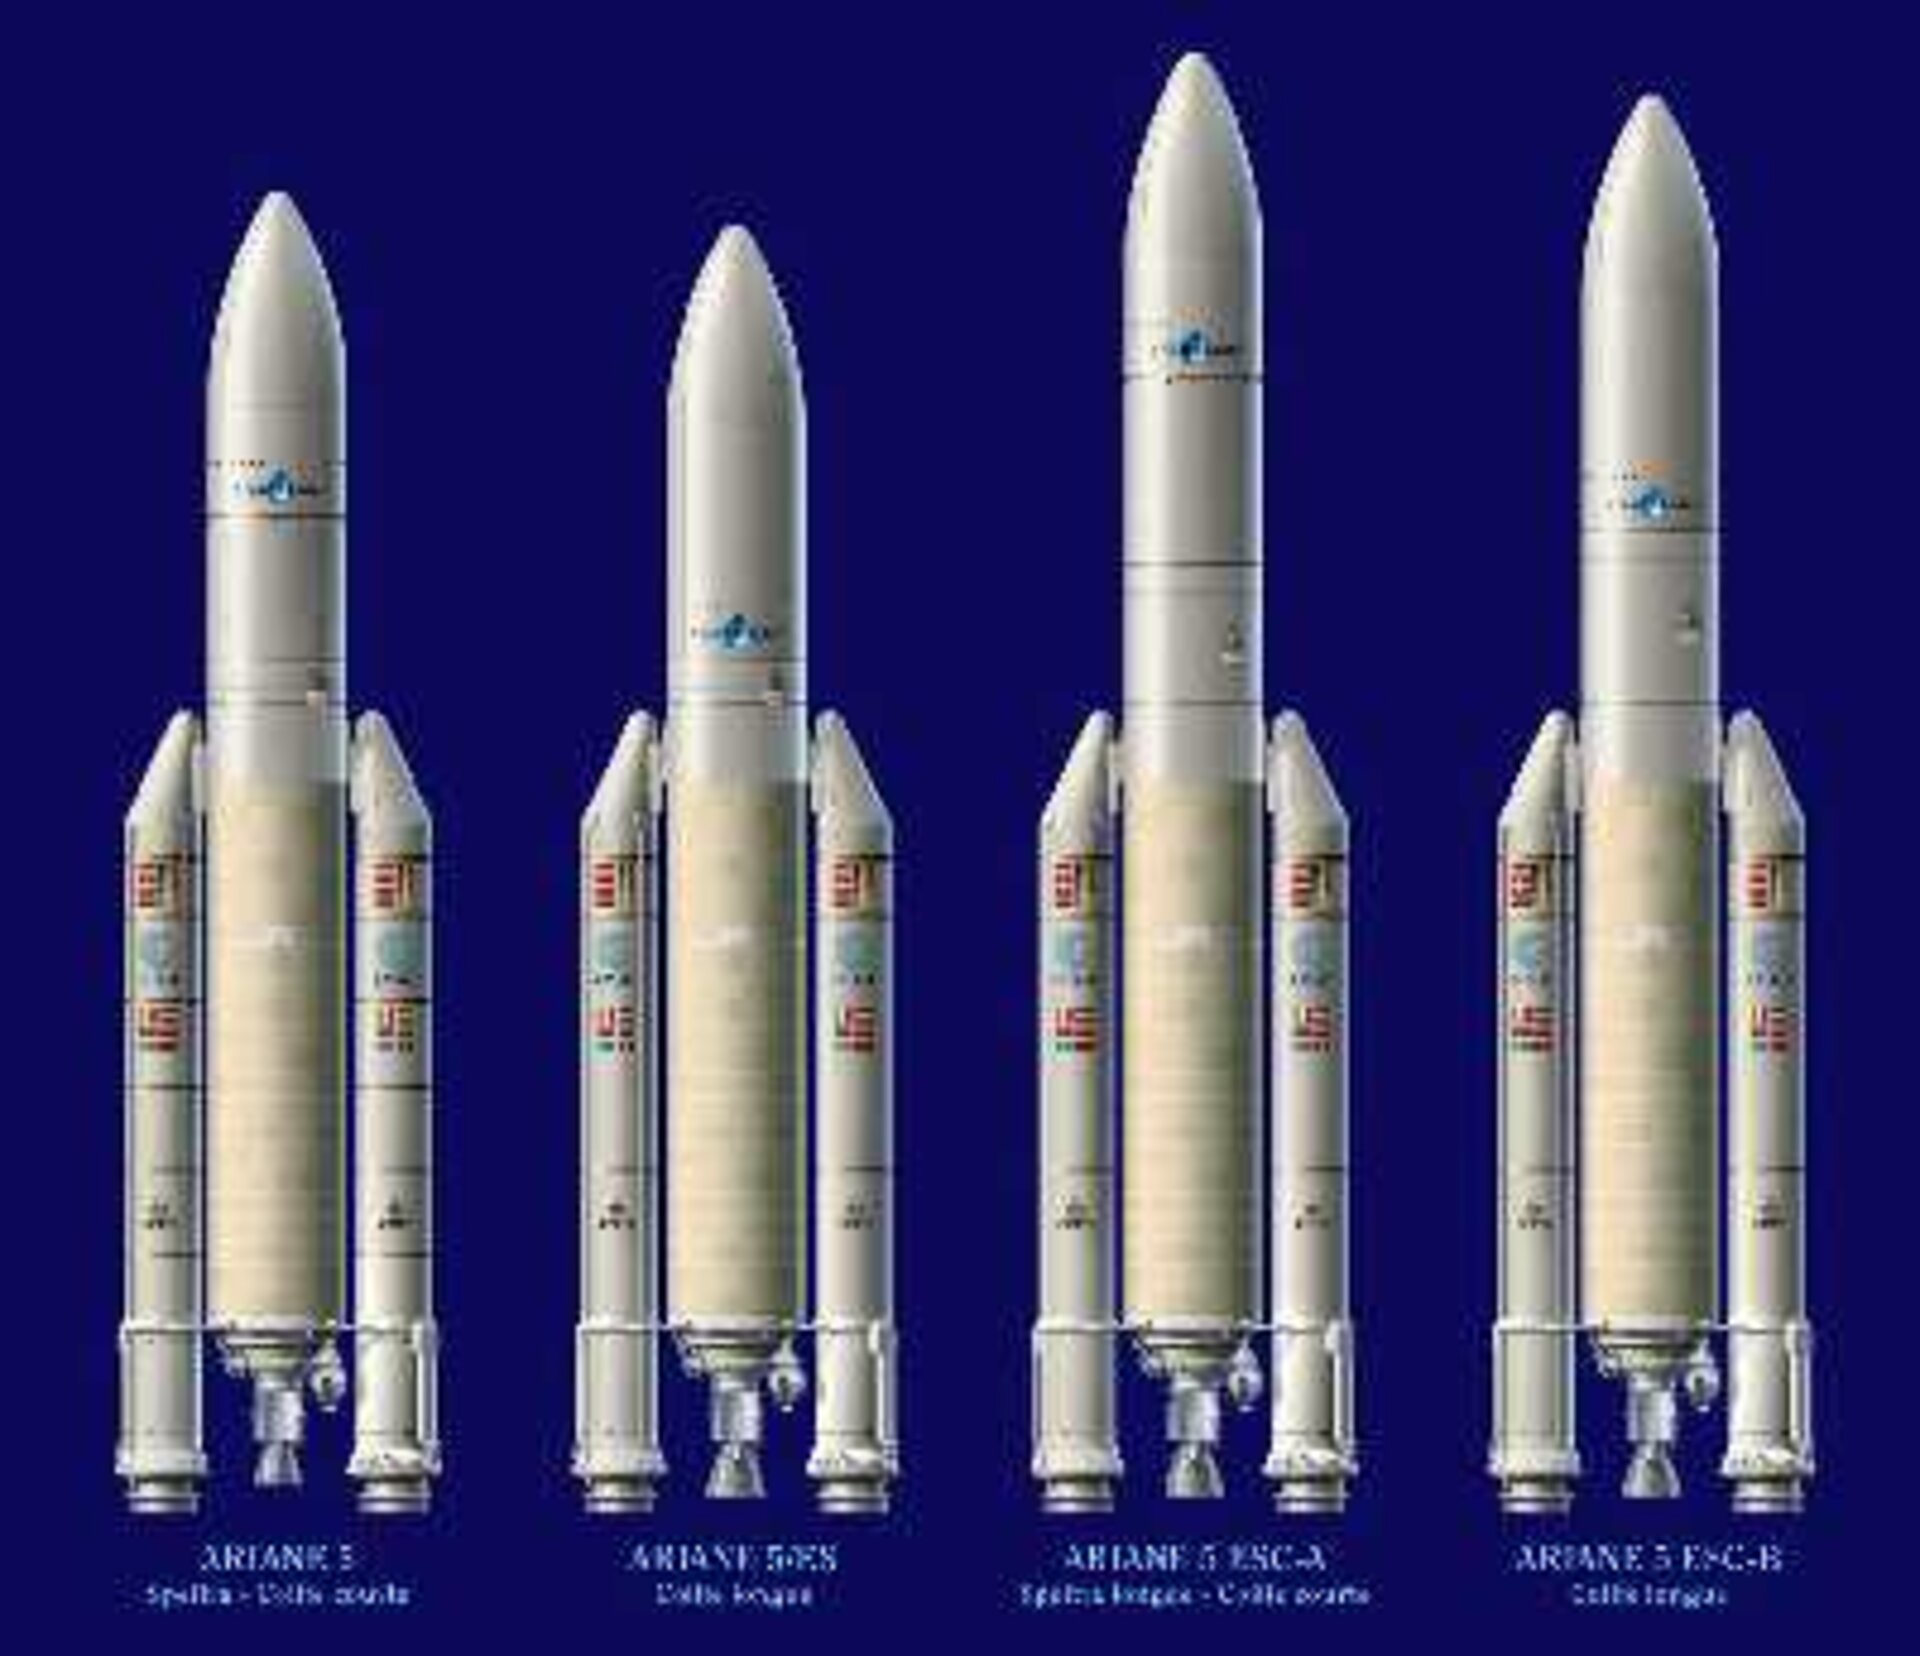 Ariane 5 development